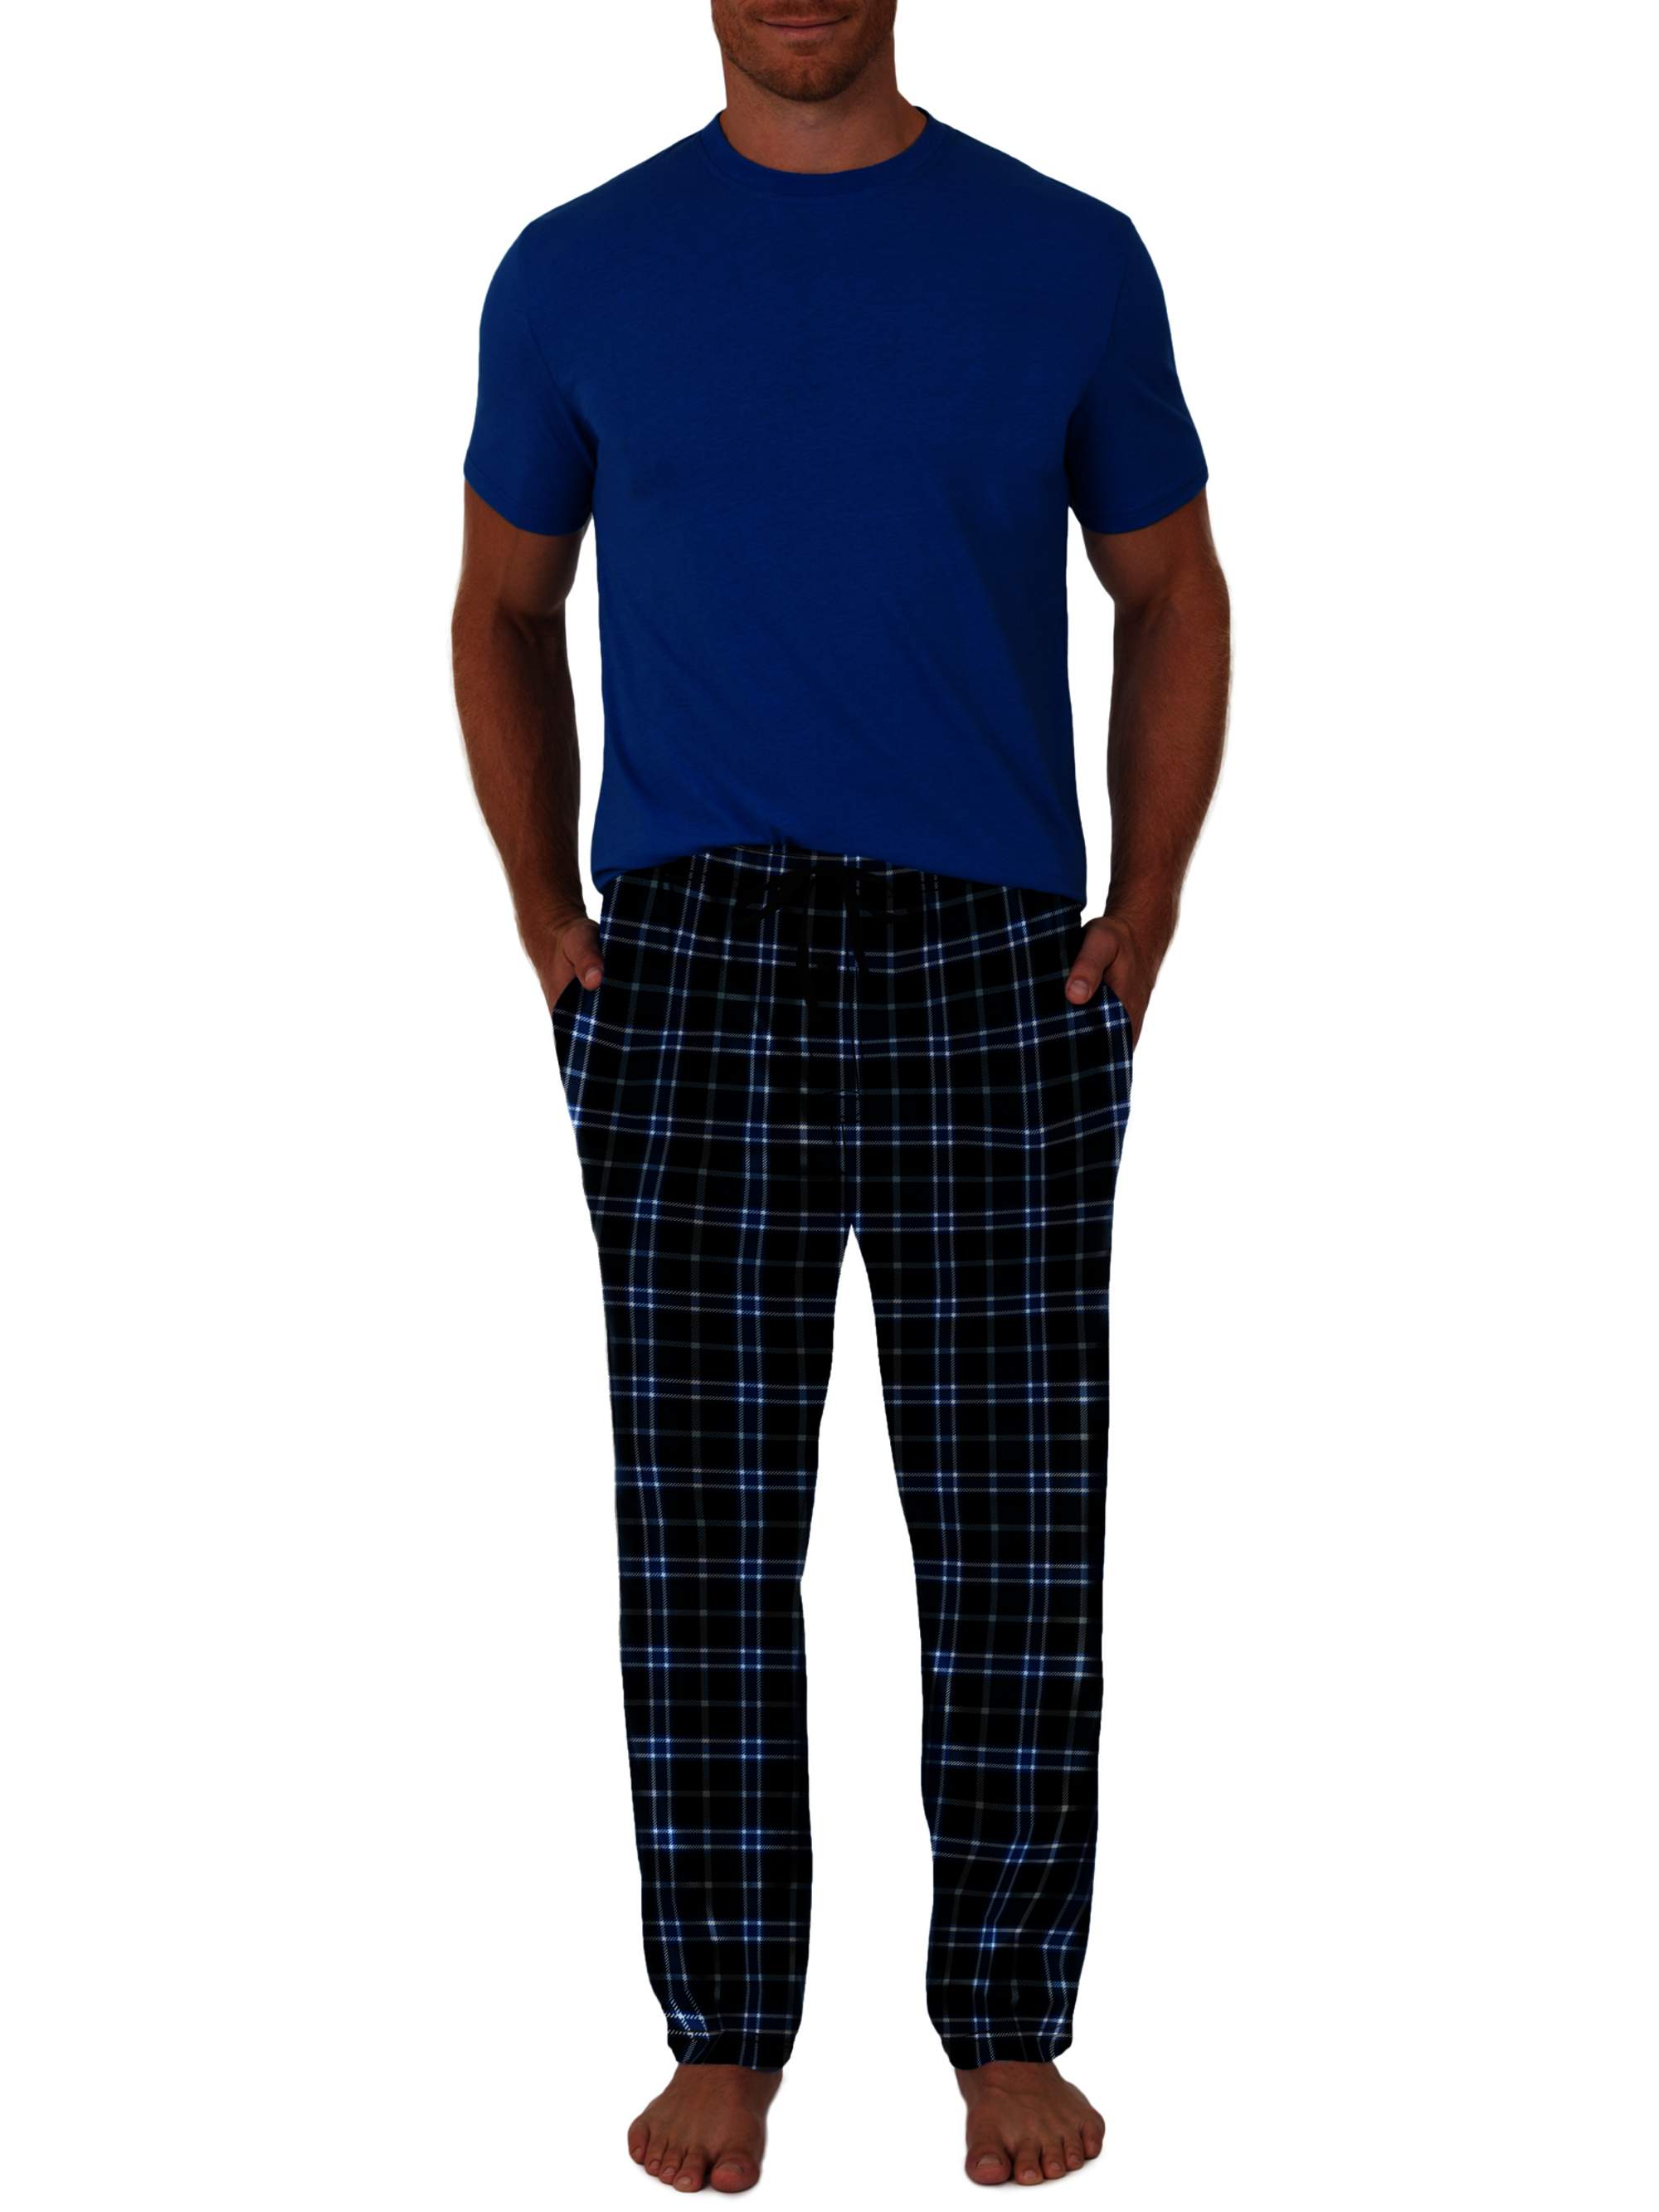 Fruit Of The Loom Men's Short Sleeve Crew Neck Top and Fleece Pajama Pant Set - image 3 of 5